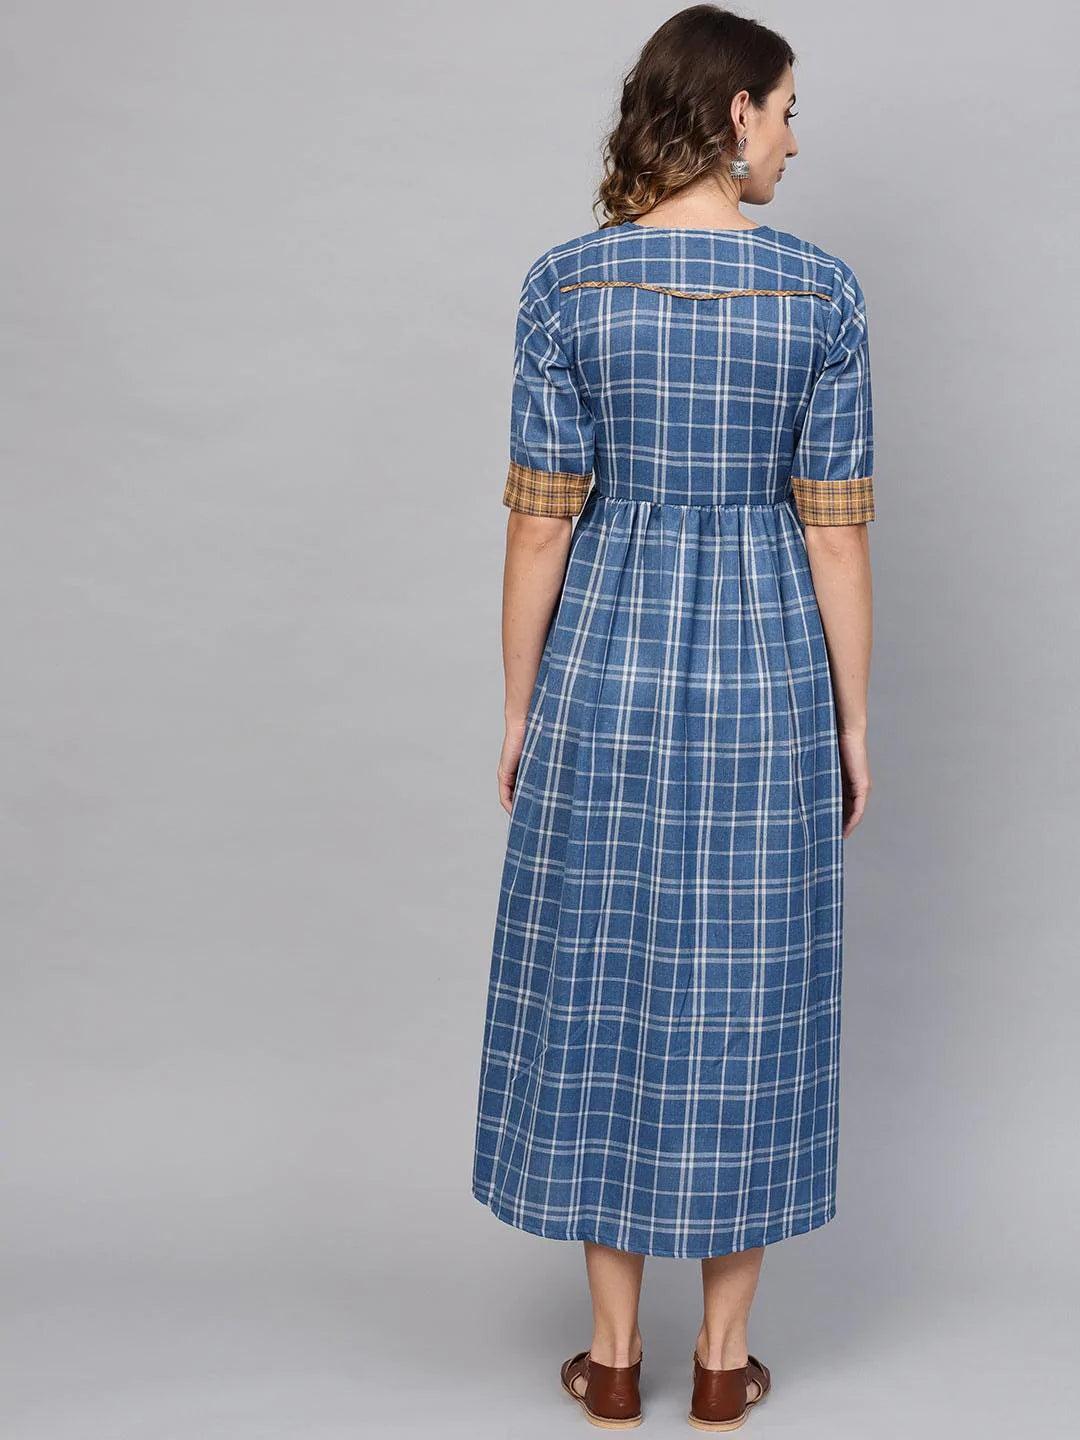 Blue Checkered Cotton Dress - ShopLibas